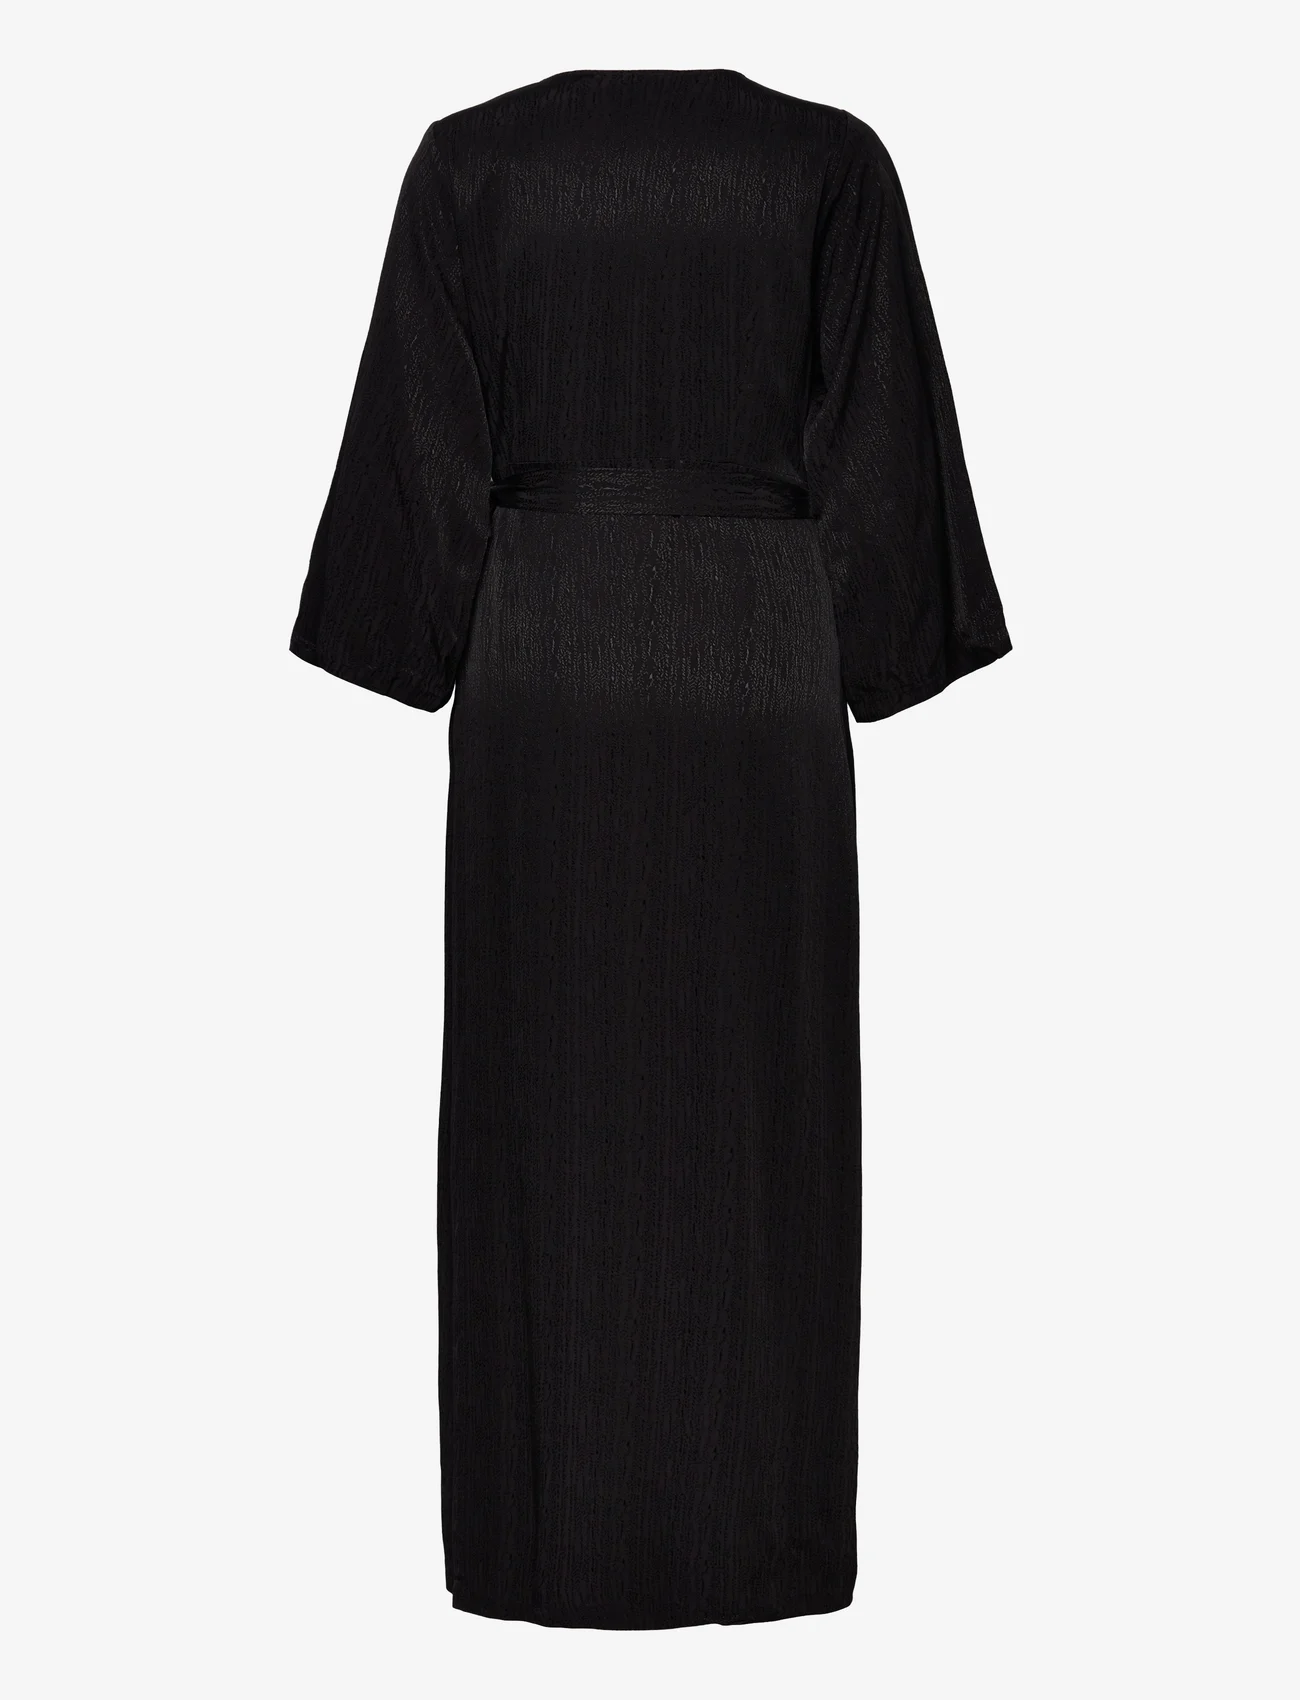 Selected Femme - SLFTYRA 34 ANKLE WRAP DRESS B - hõlmikkleidid - black - 1